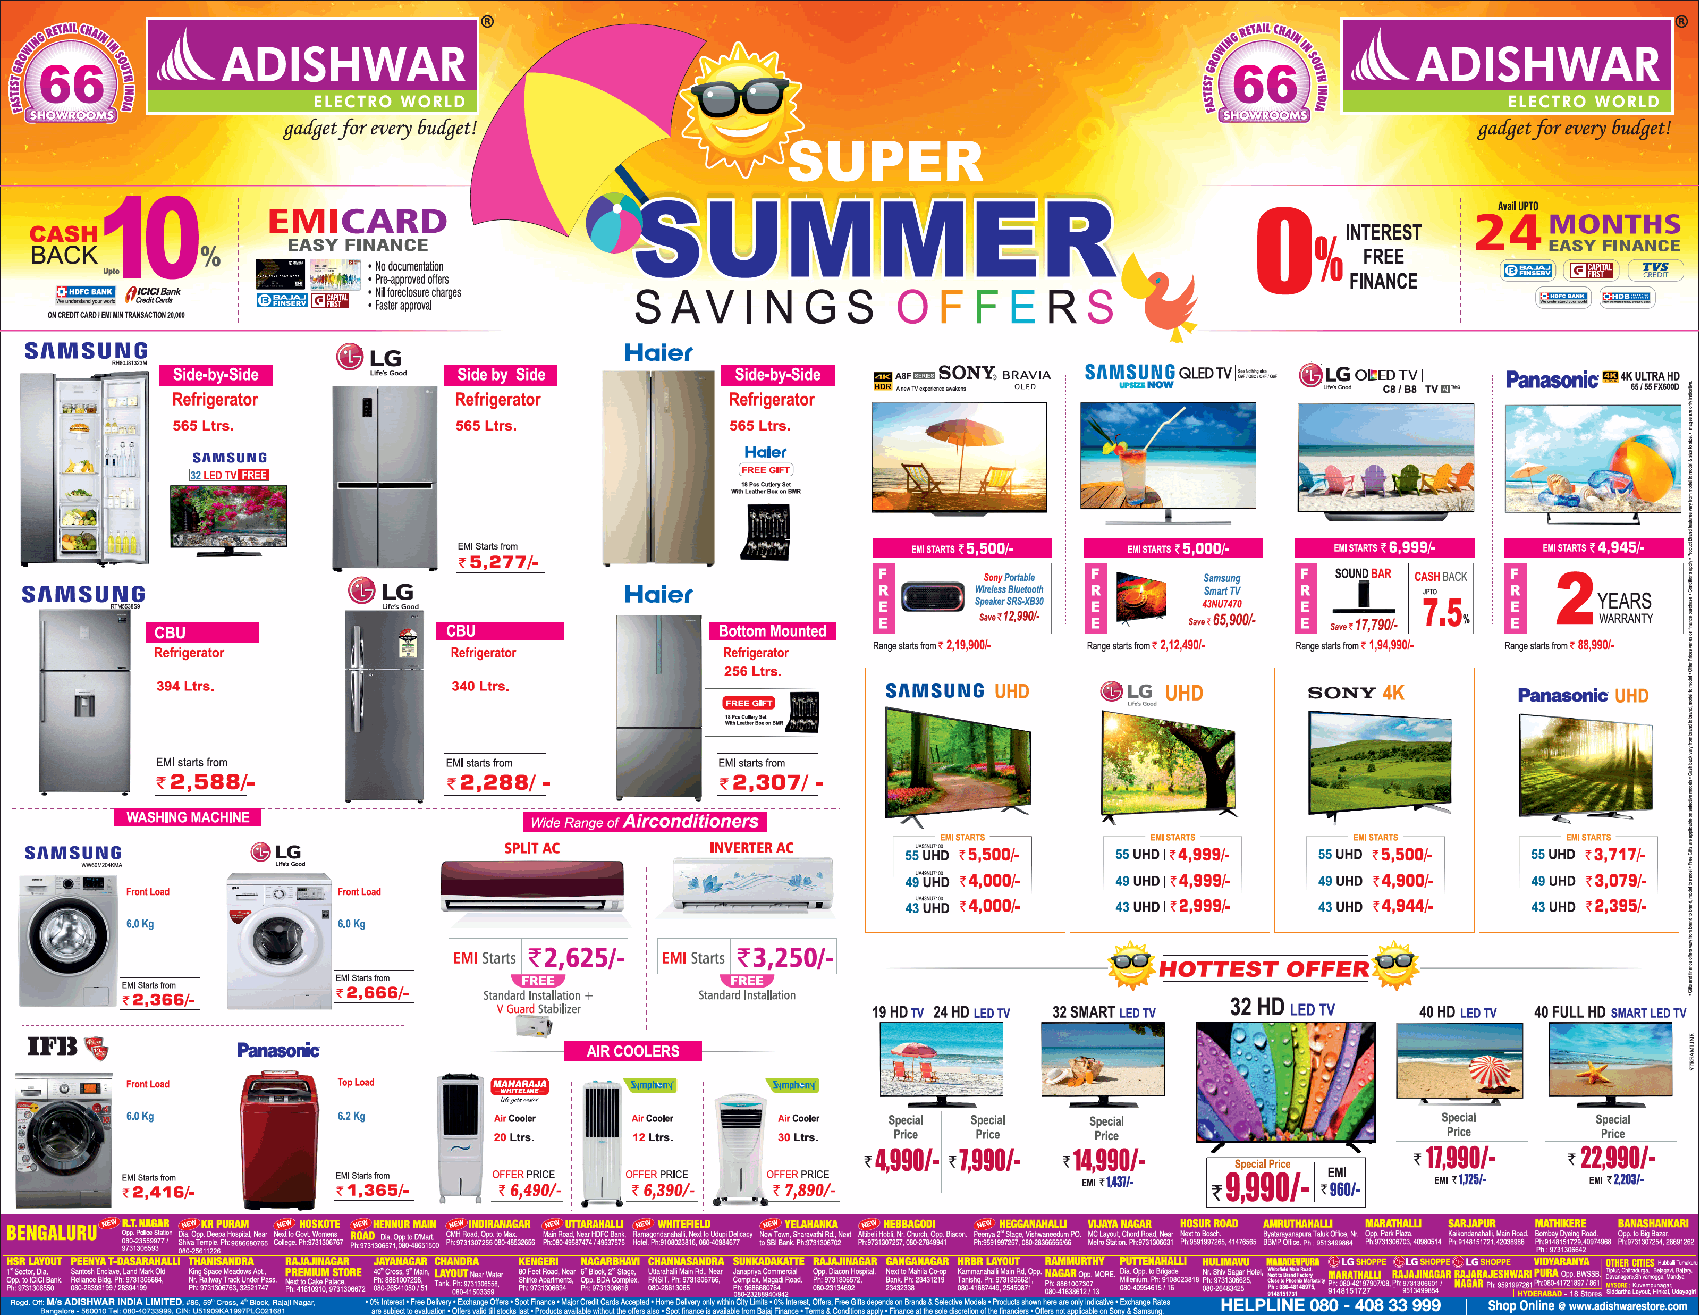 adishwar-super-summer-savings-offers-ad-times-of-india-bangalore-23-02-2019.png